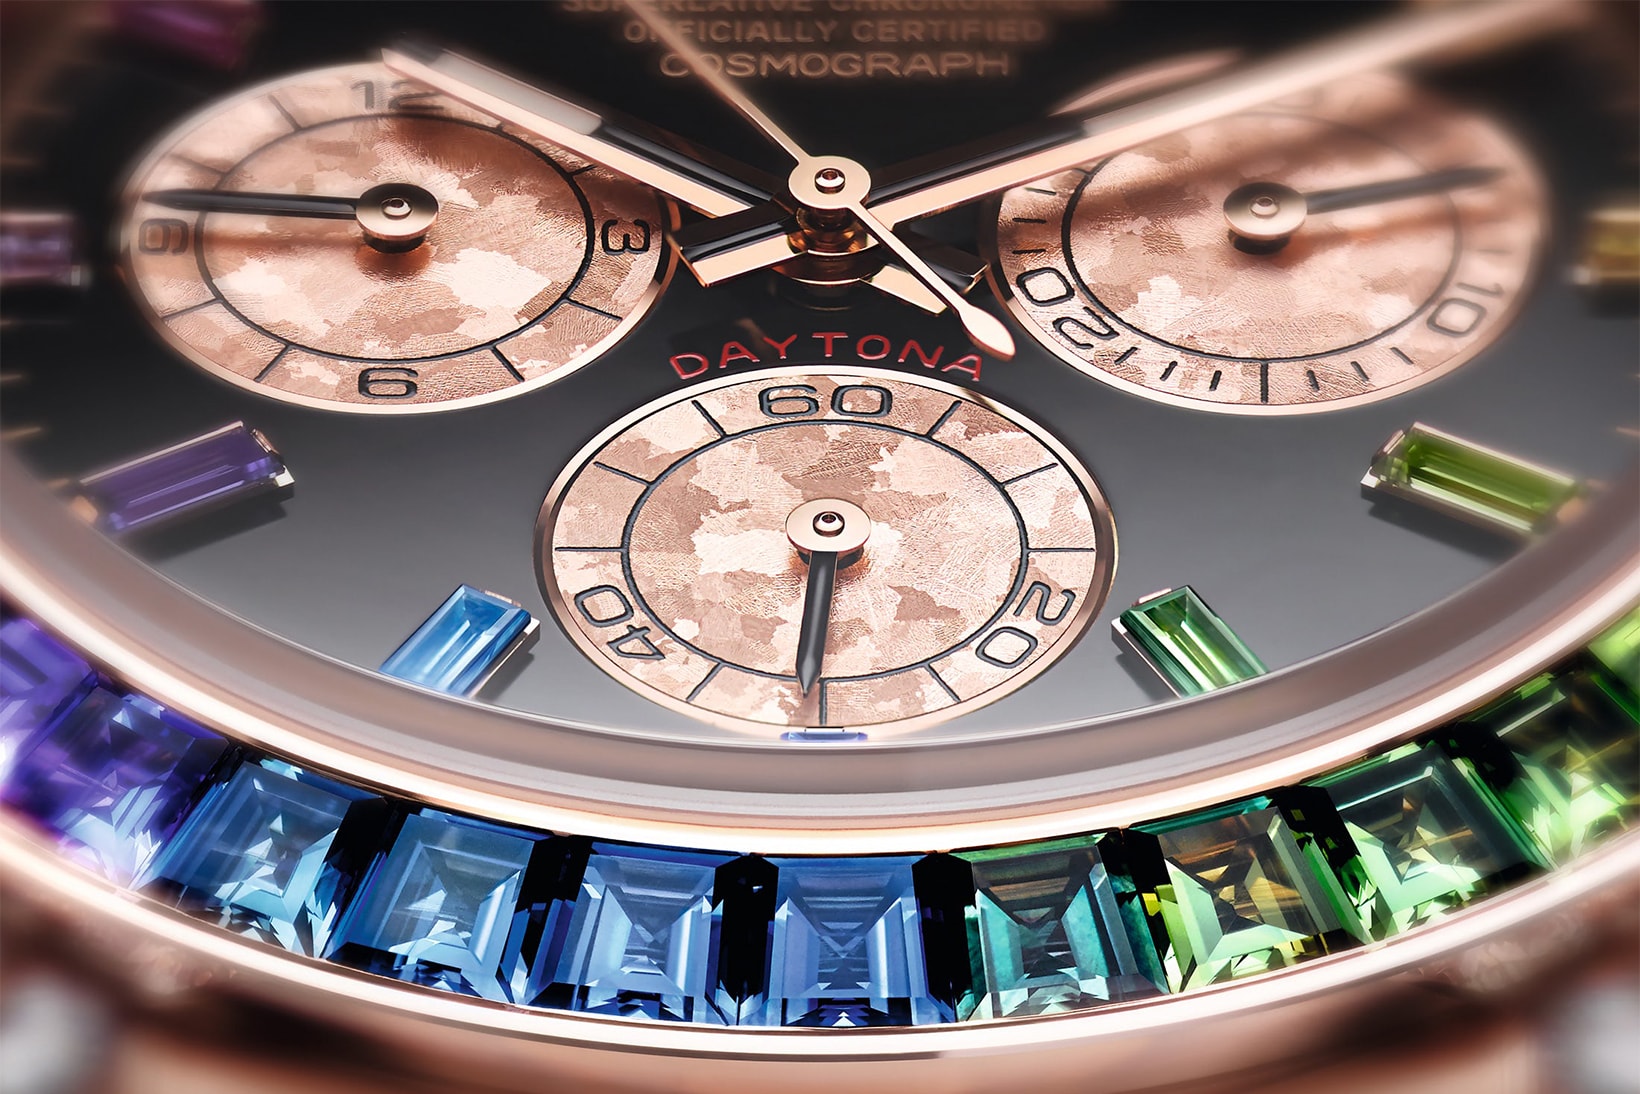 Rolex Rainbow Daytona Everose Gold Ref 116595 release date info drop watch